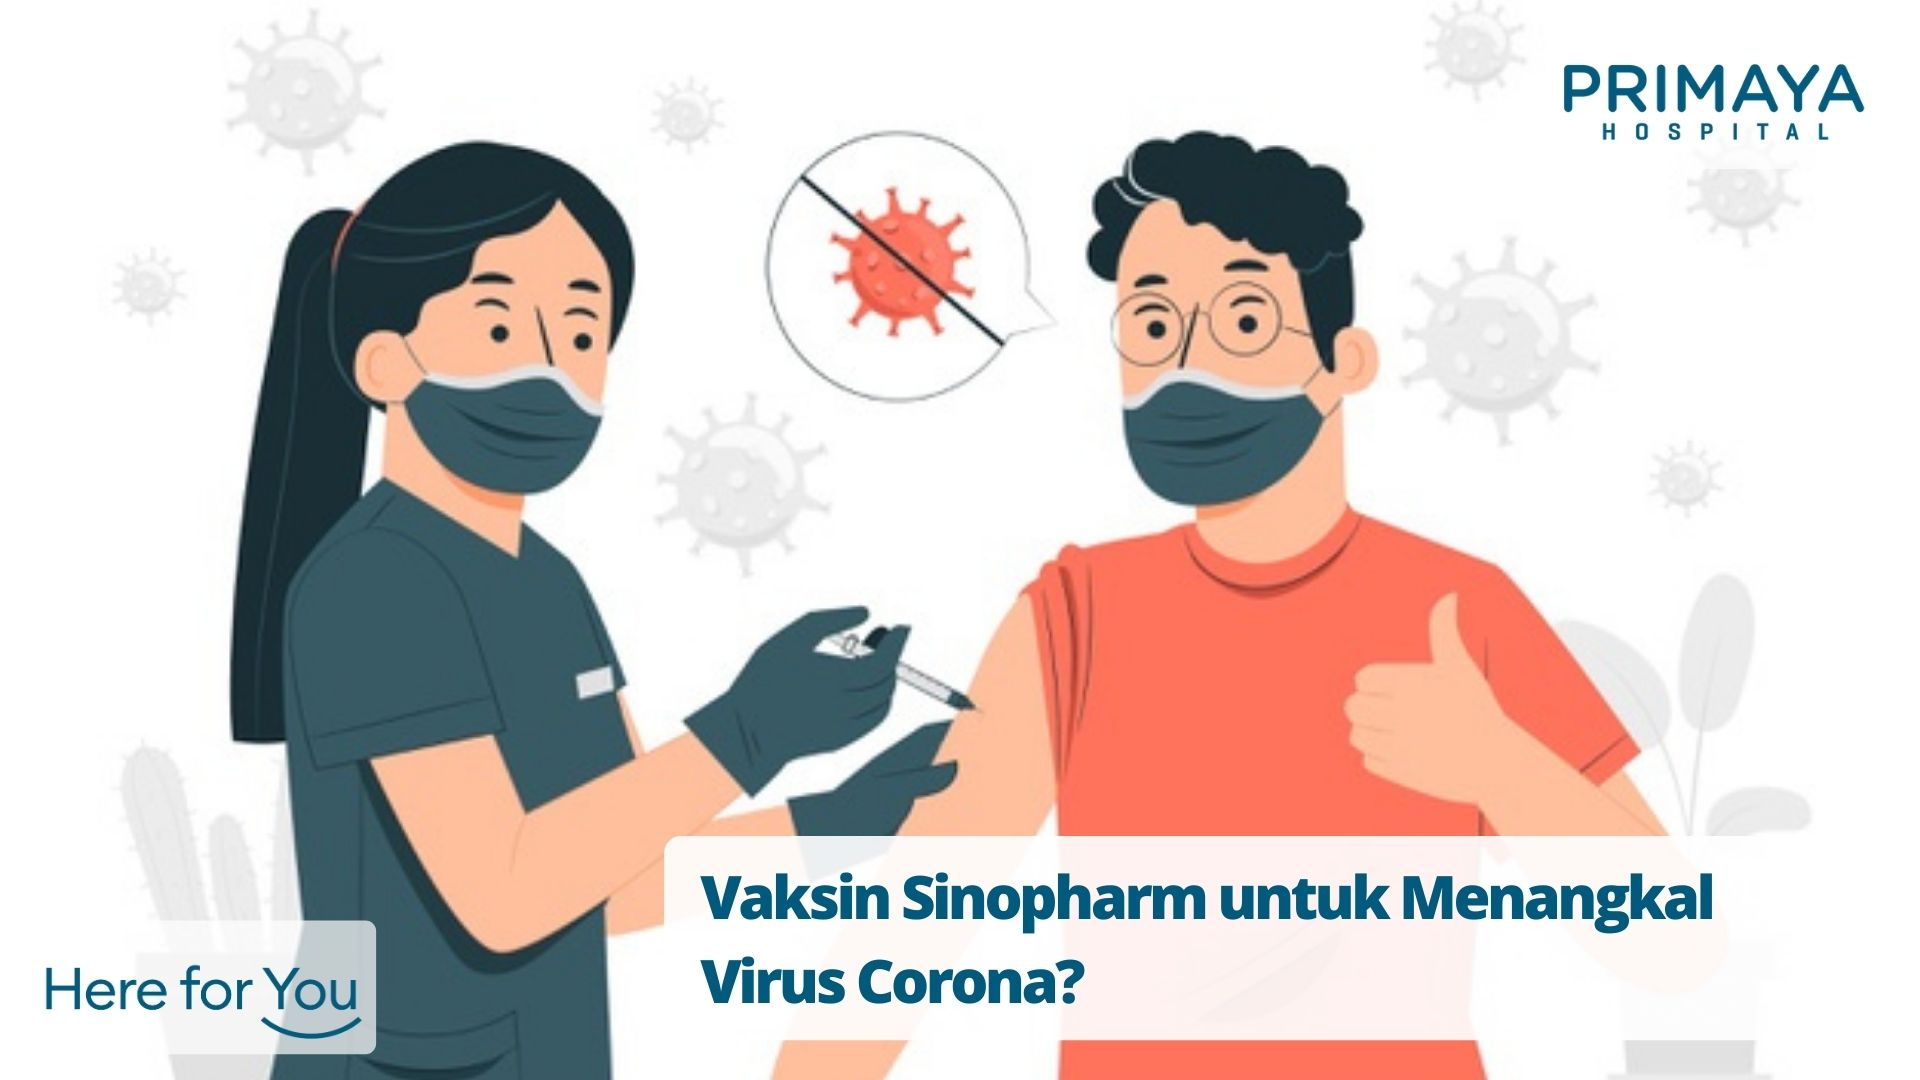 Vaksin Sinopharm untuk Menangkal Virus Corona